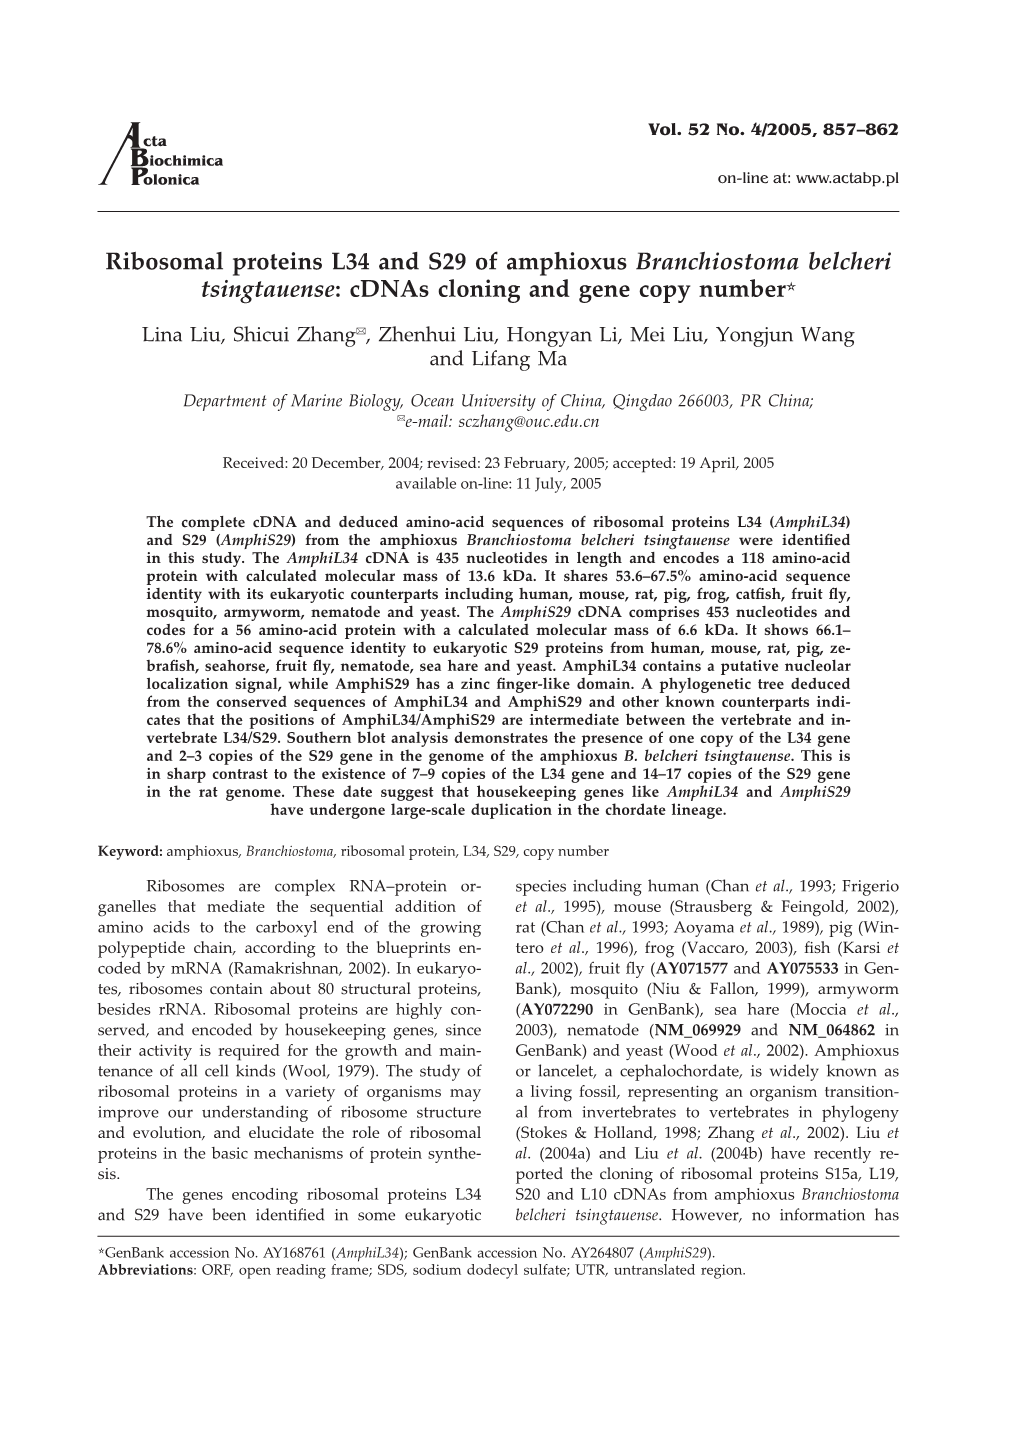 Ribosomal Proteins L34 and S29 of Amphioxus Branchiostoma Belcheri Tsingtauense: Cdnas Cloning and Gene Copy Number